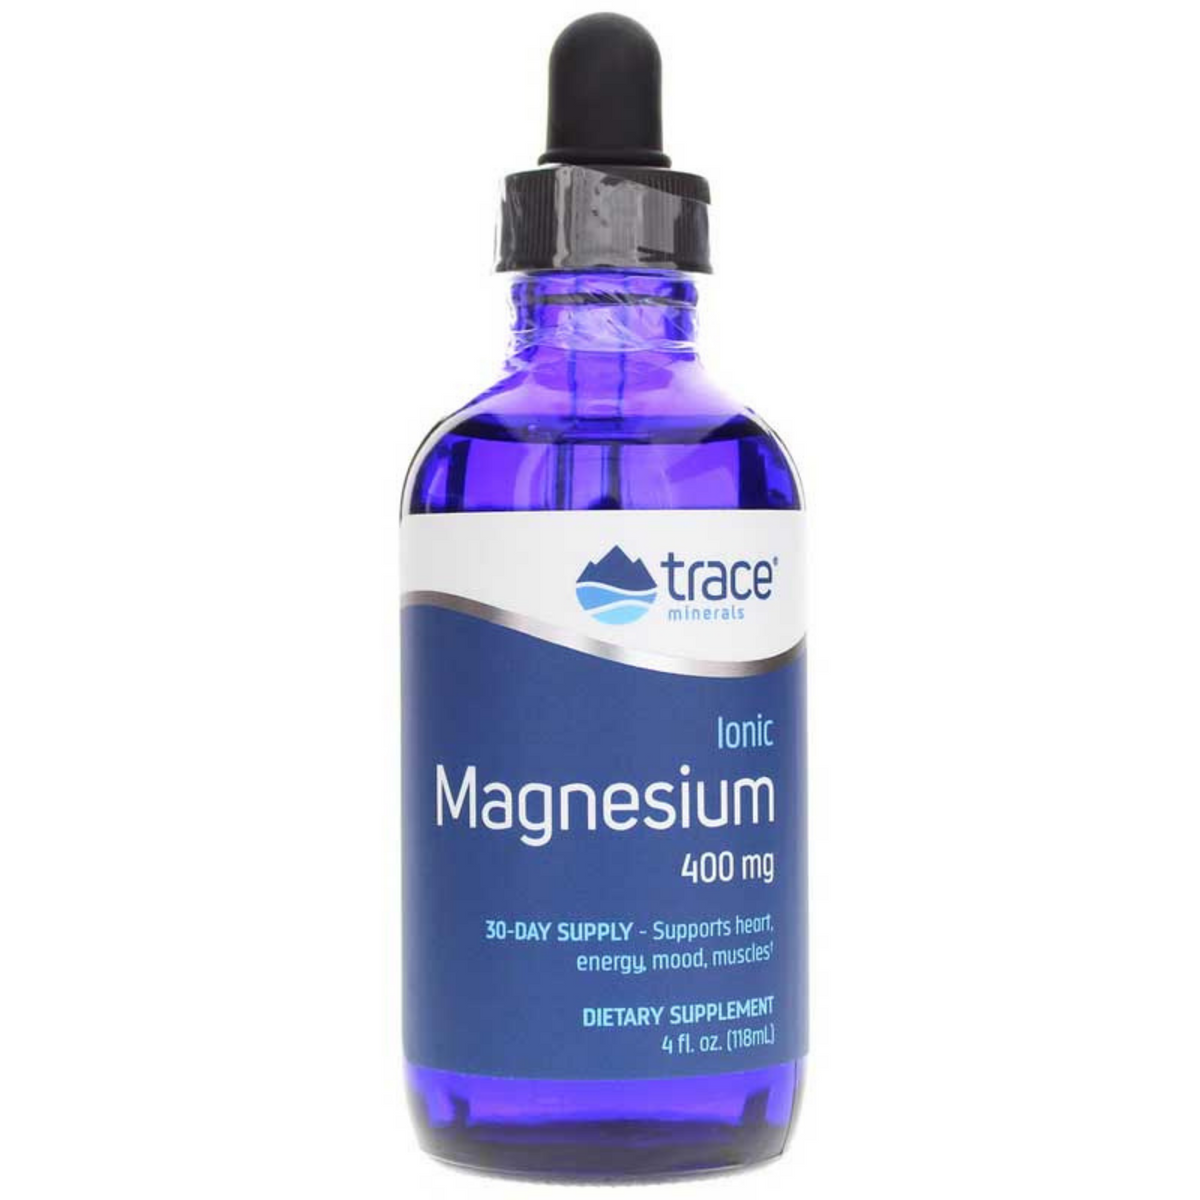 Primary Image of Ionic Magnesium 4oz